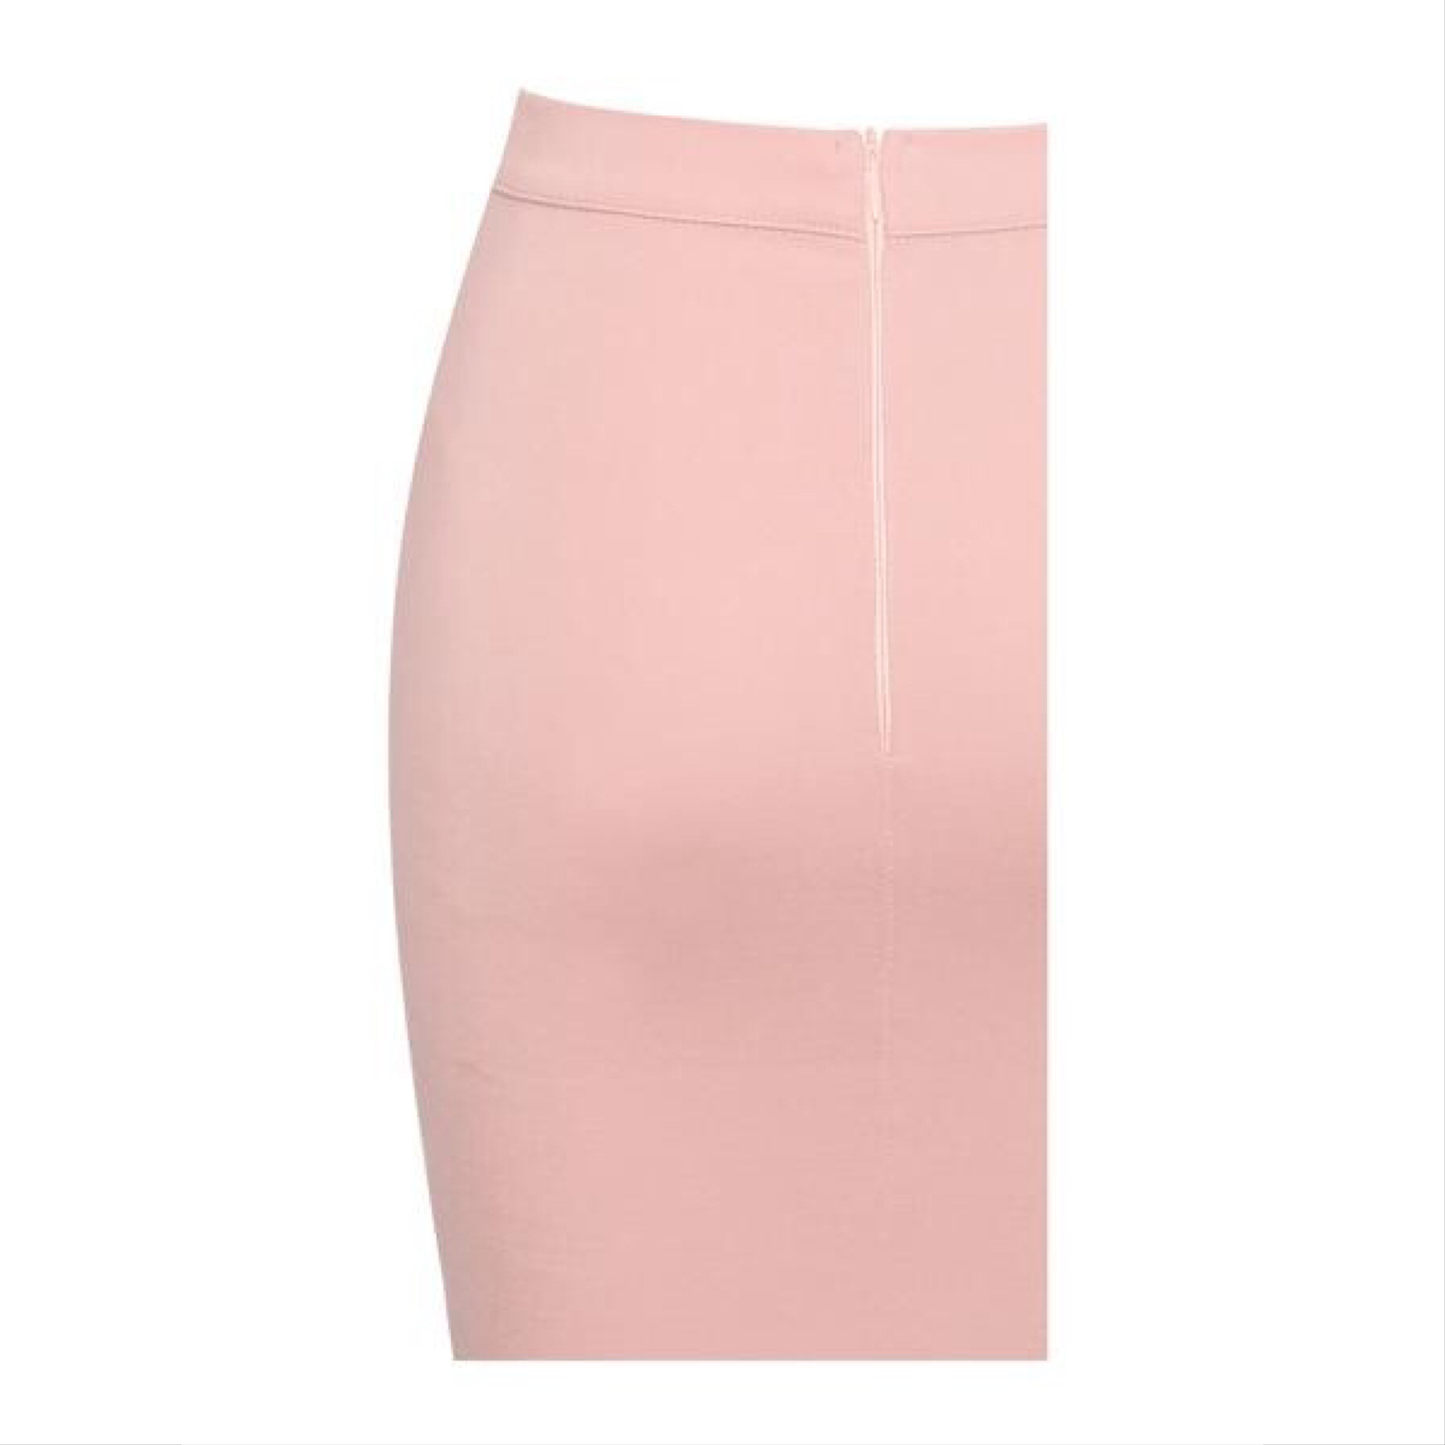 💞 2 Piece Lace Up Crop Top Skirt Set 💞